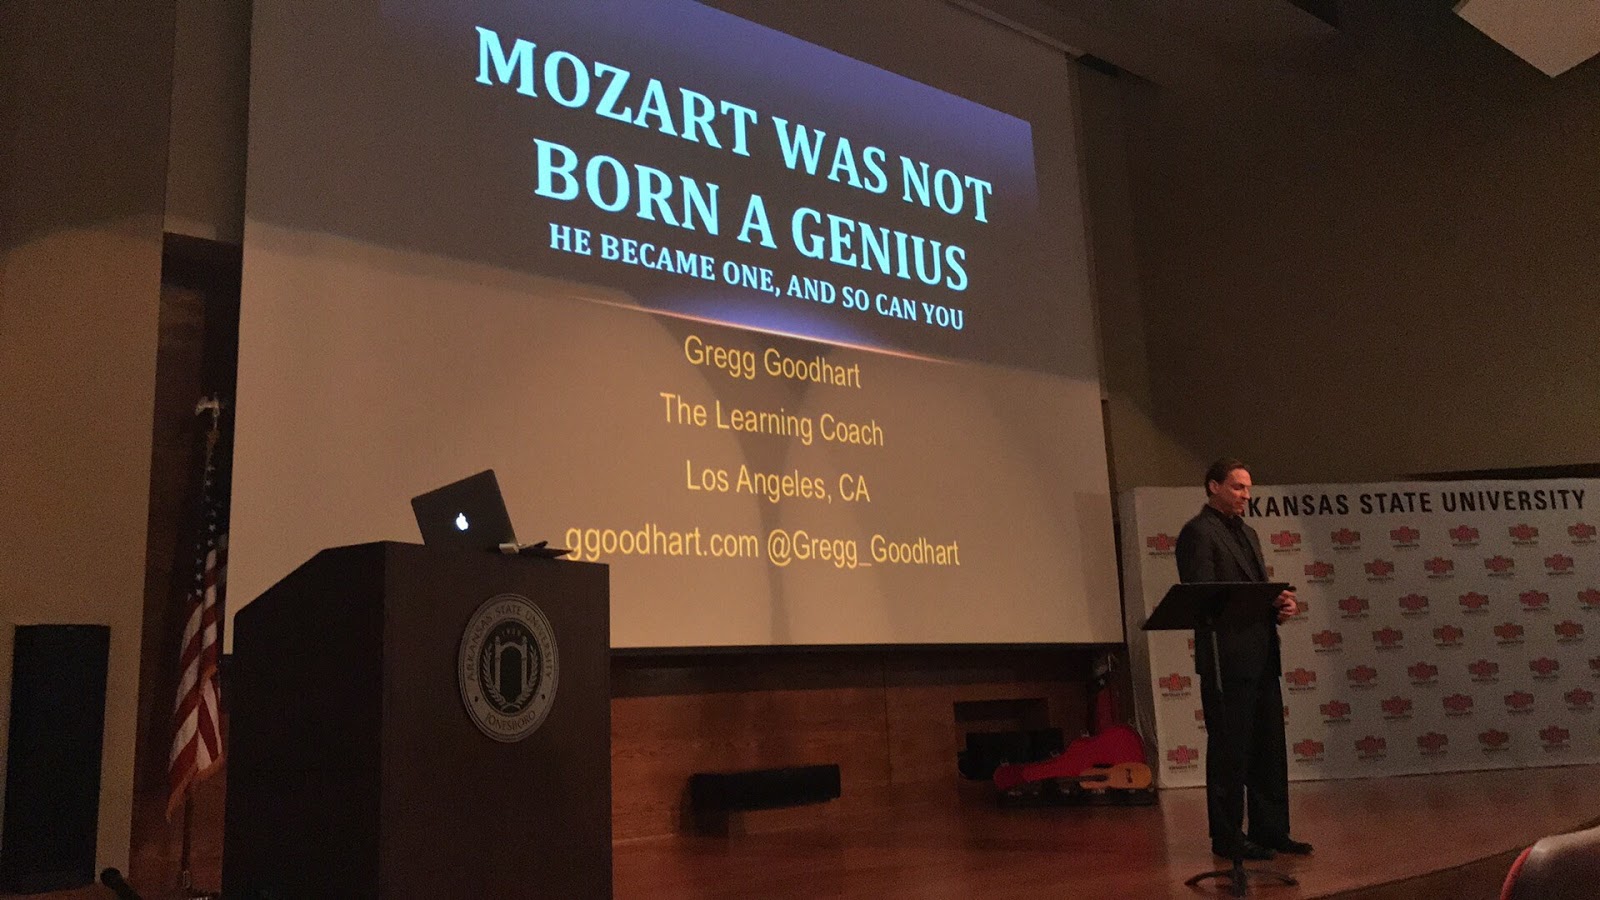 Mozart was not born a genius